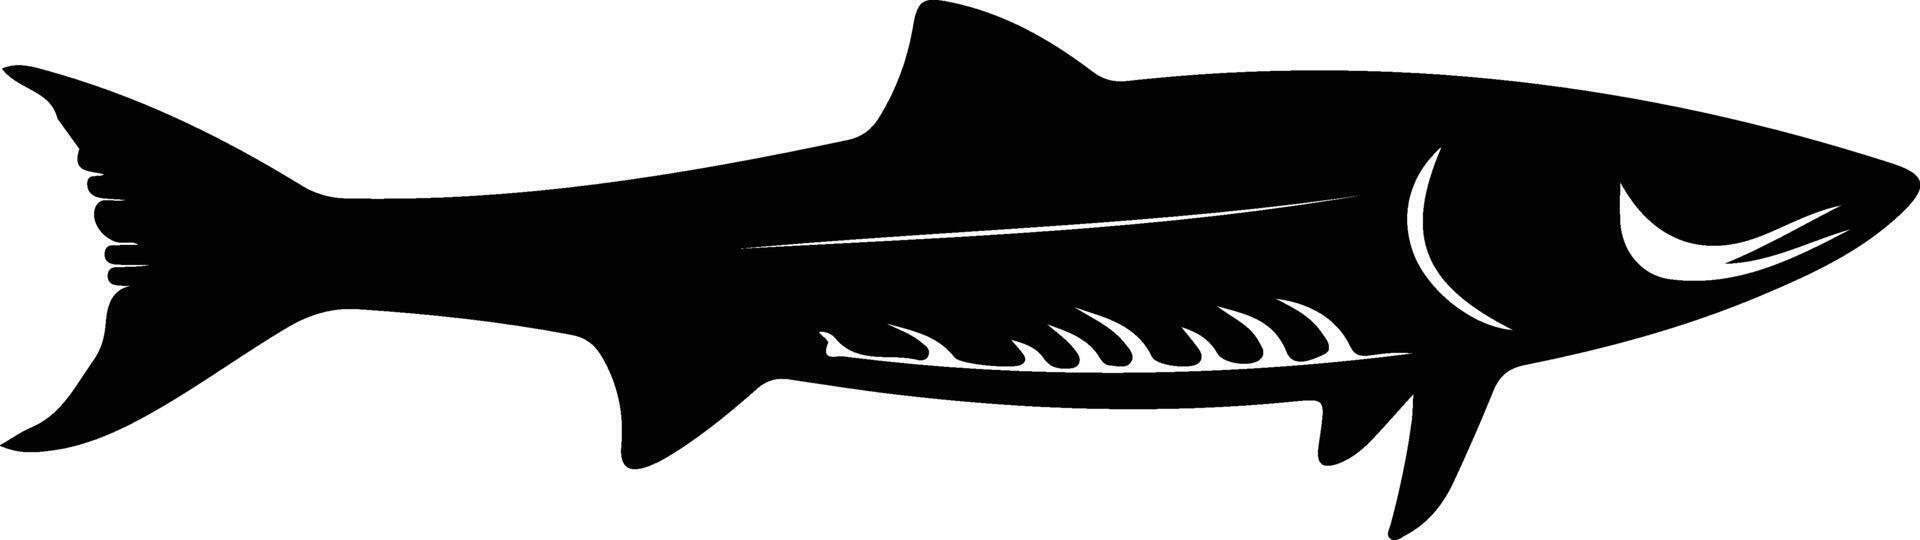 barracuda svart silhuett vektor